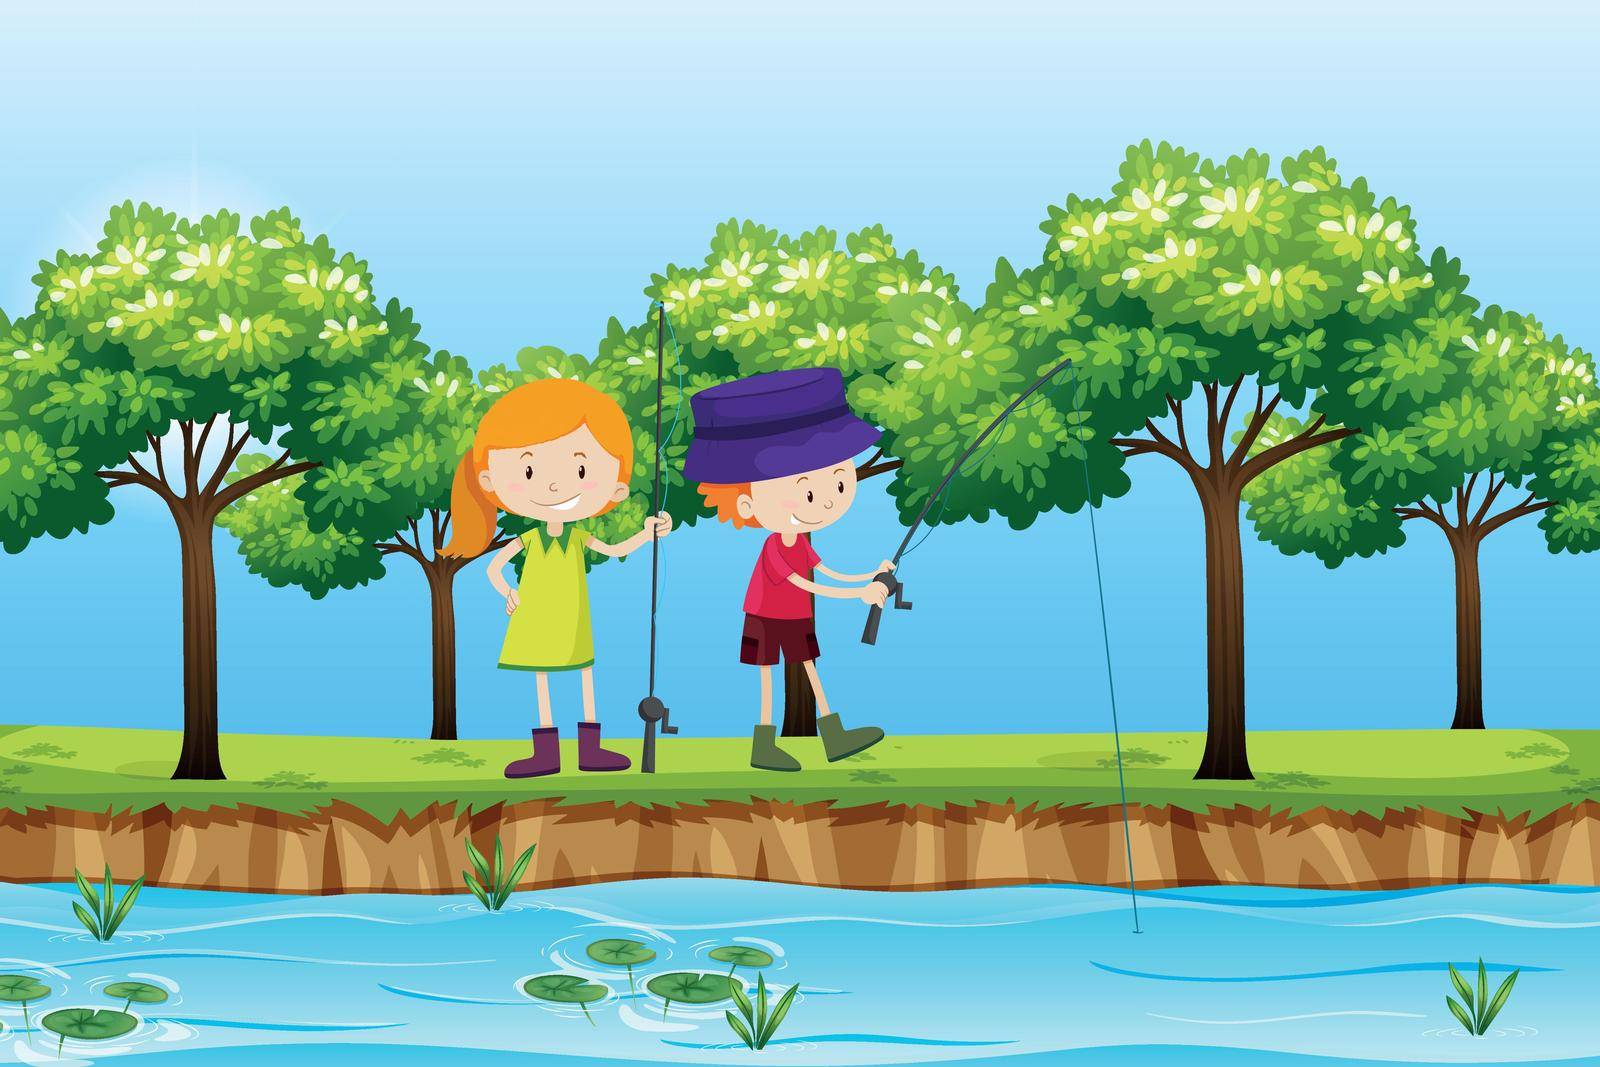 Two children fishing lake scene by iimages